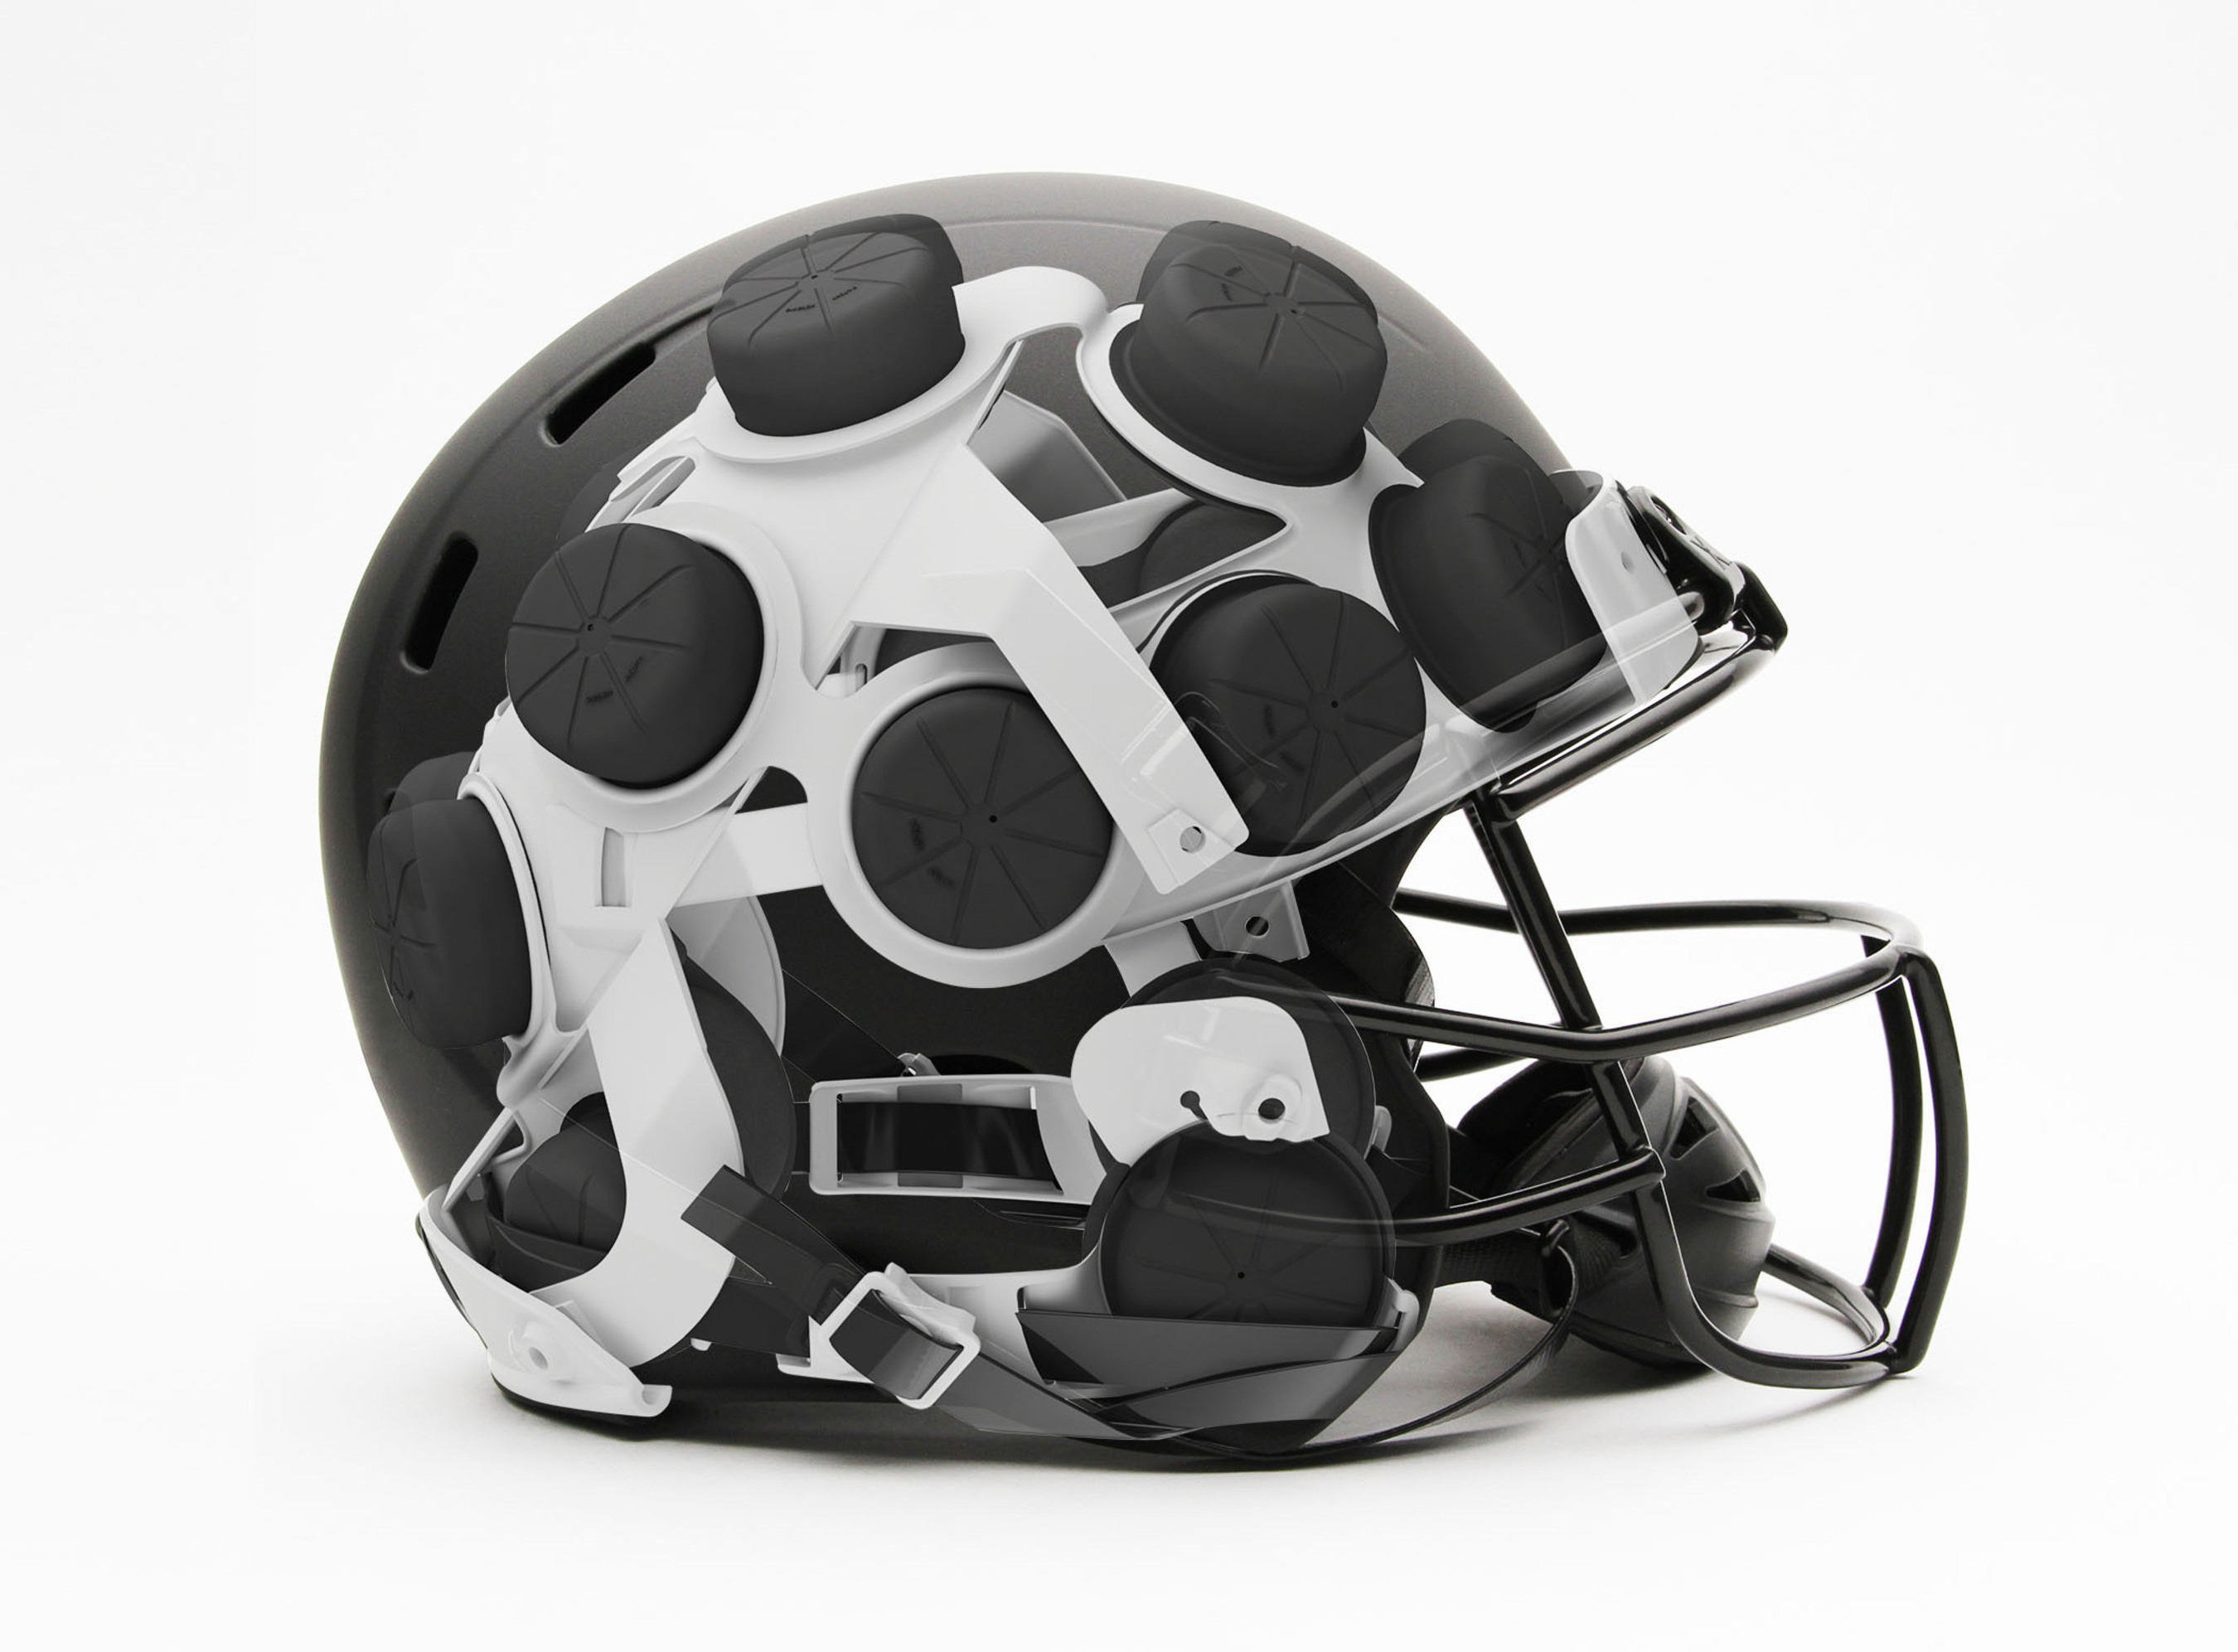 Xenith X2 Helmet Technology - Worn by Baltimore Ravens RB Ray Rice in Super Bowl XLVII. (PRNewsFoto/Xenith LLC) (PRNewsFoto/XENITH LLC)